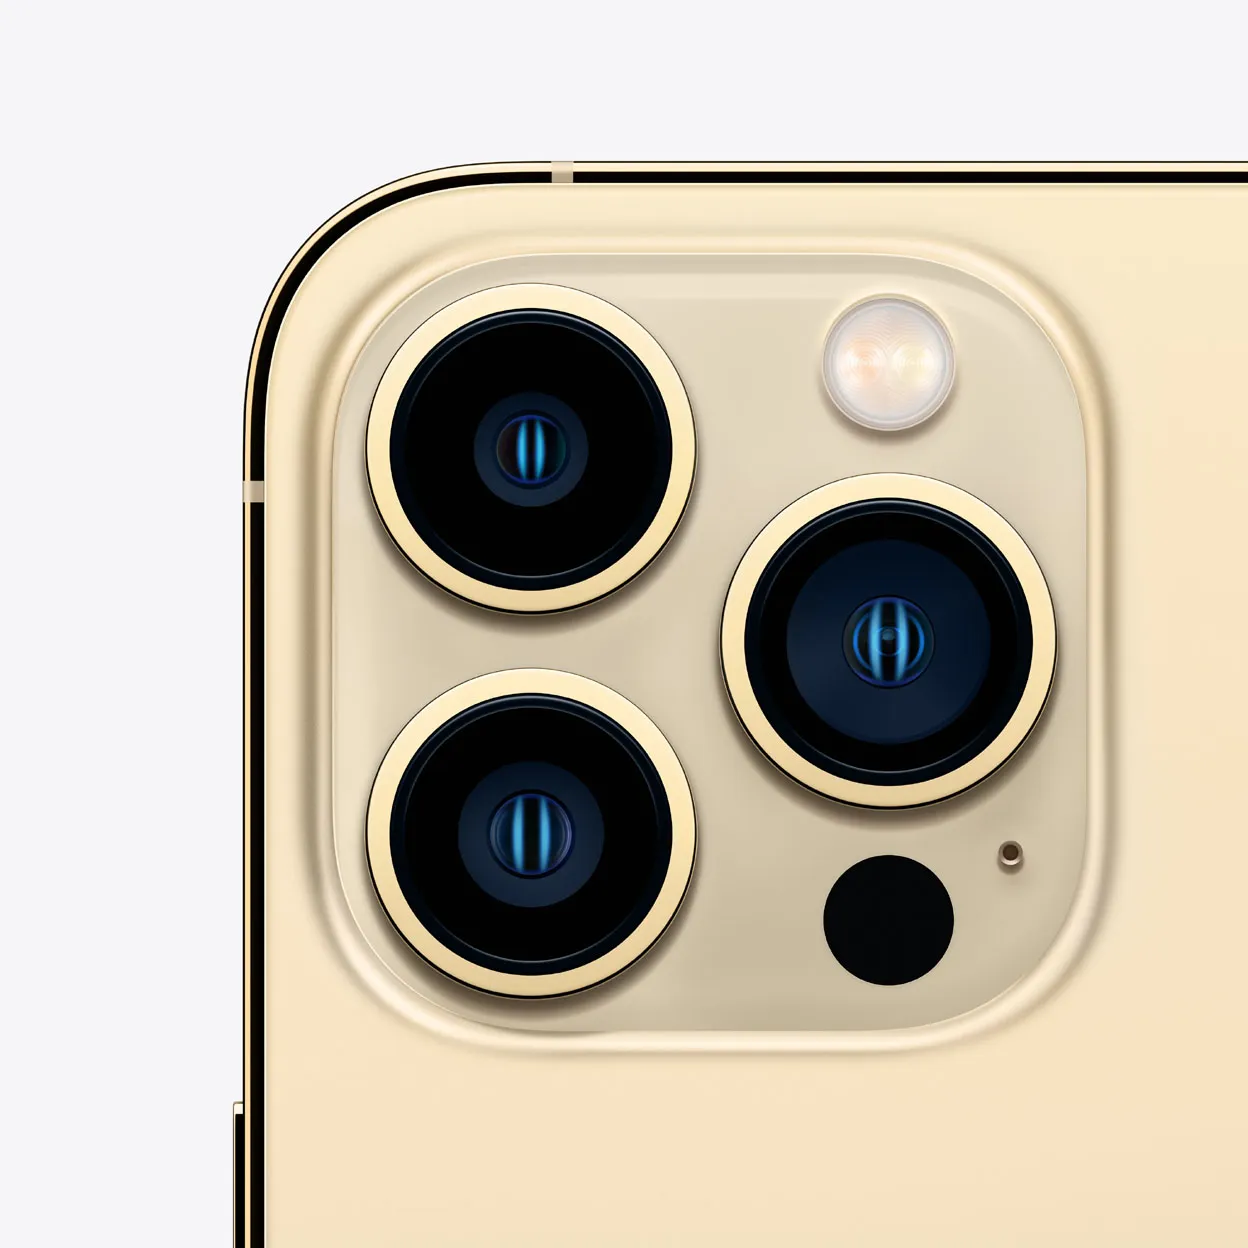 Apple iPhone 13 Pro Max (256GB) – Gold